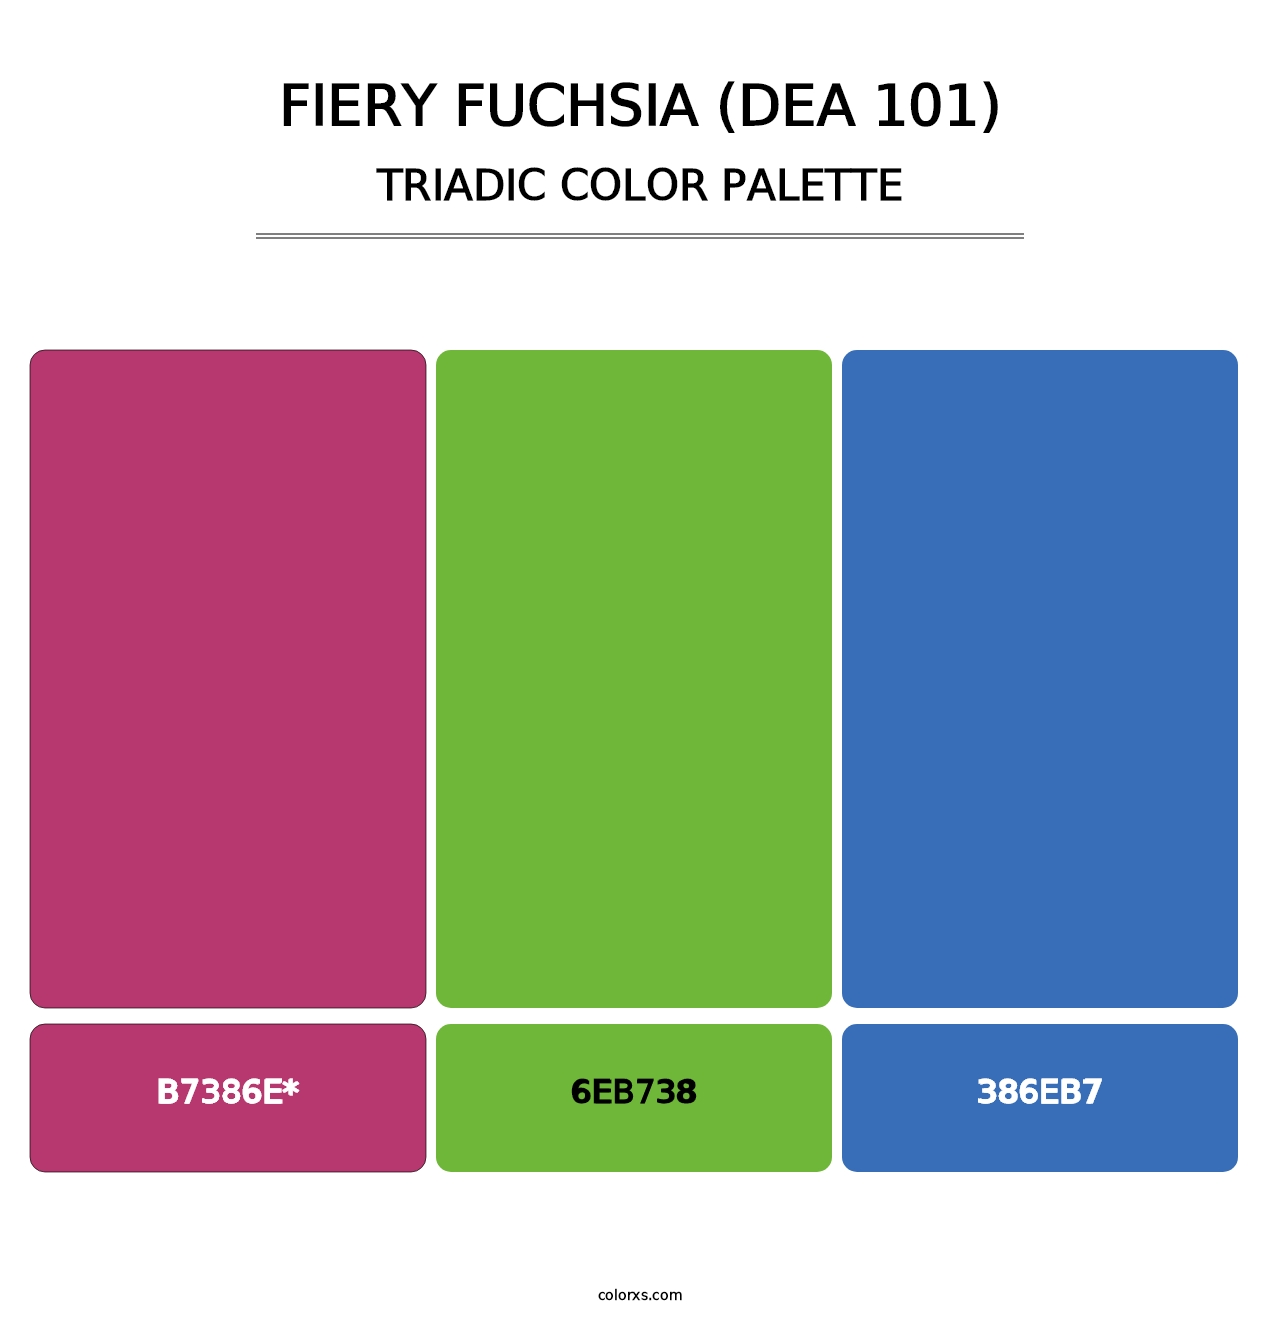 Fiery Fuchsia (DEA 101) - Triadic Color Palette